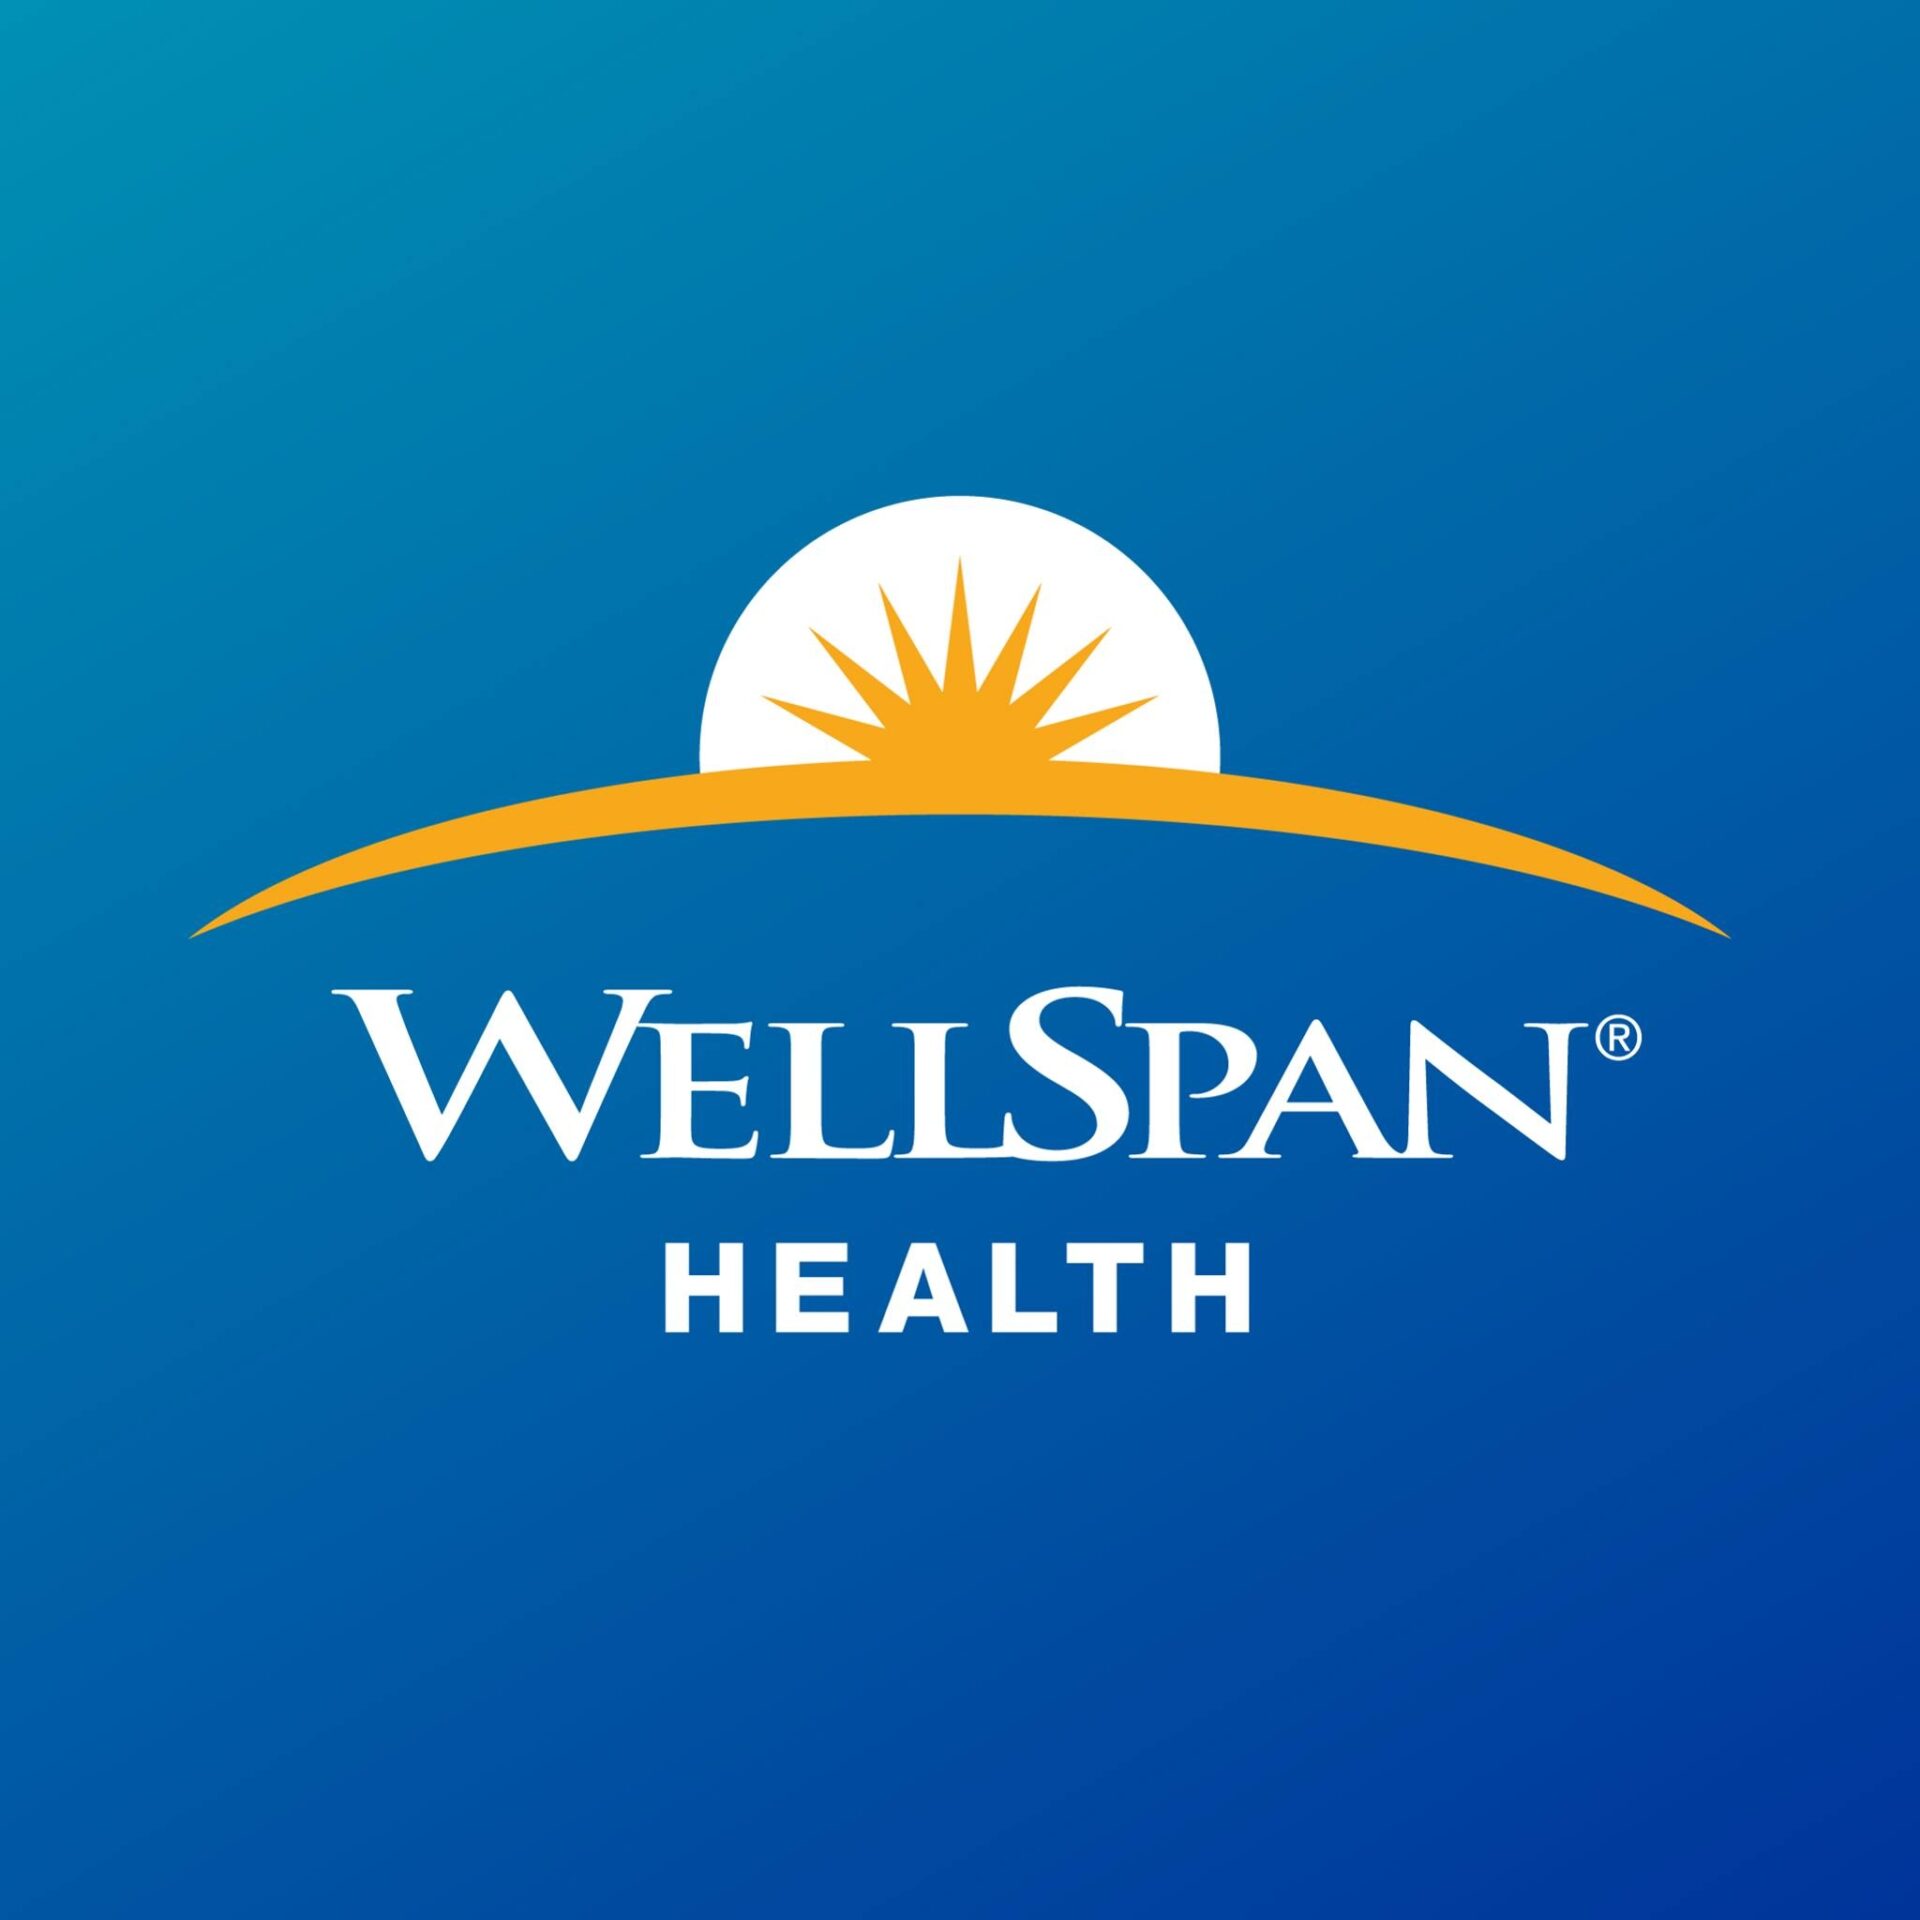 WellSpan Health offered 187 million in benefits to region during 2021